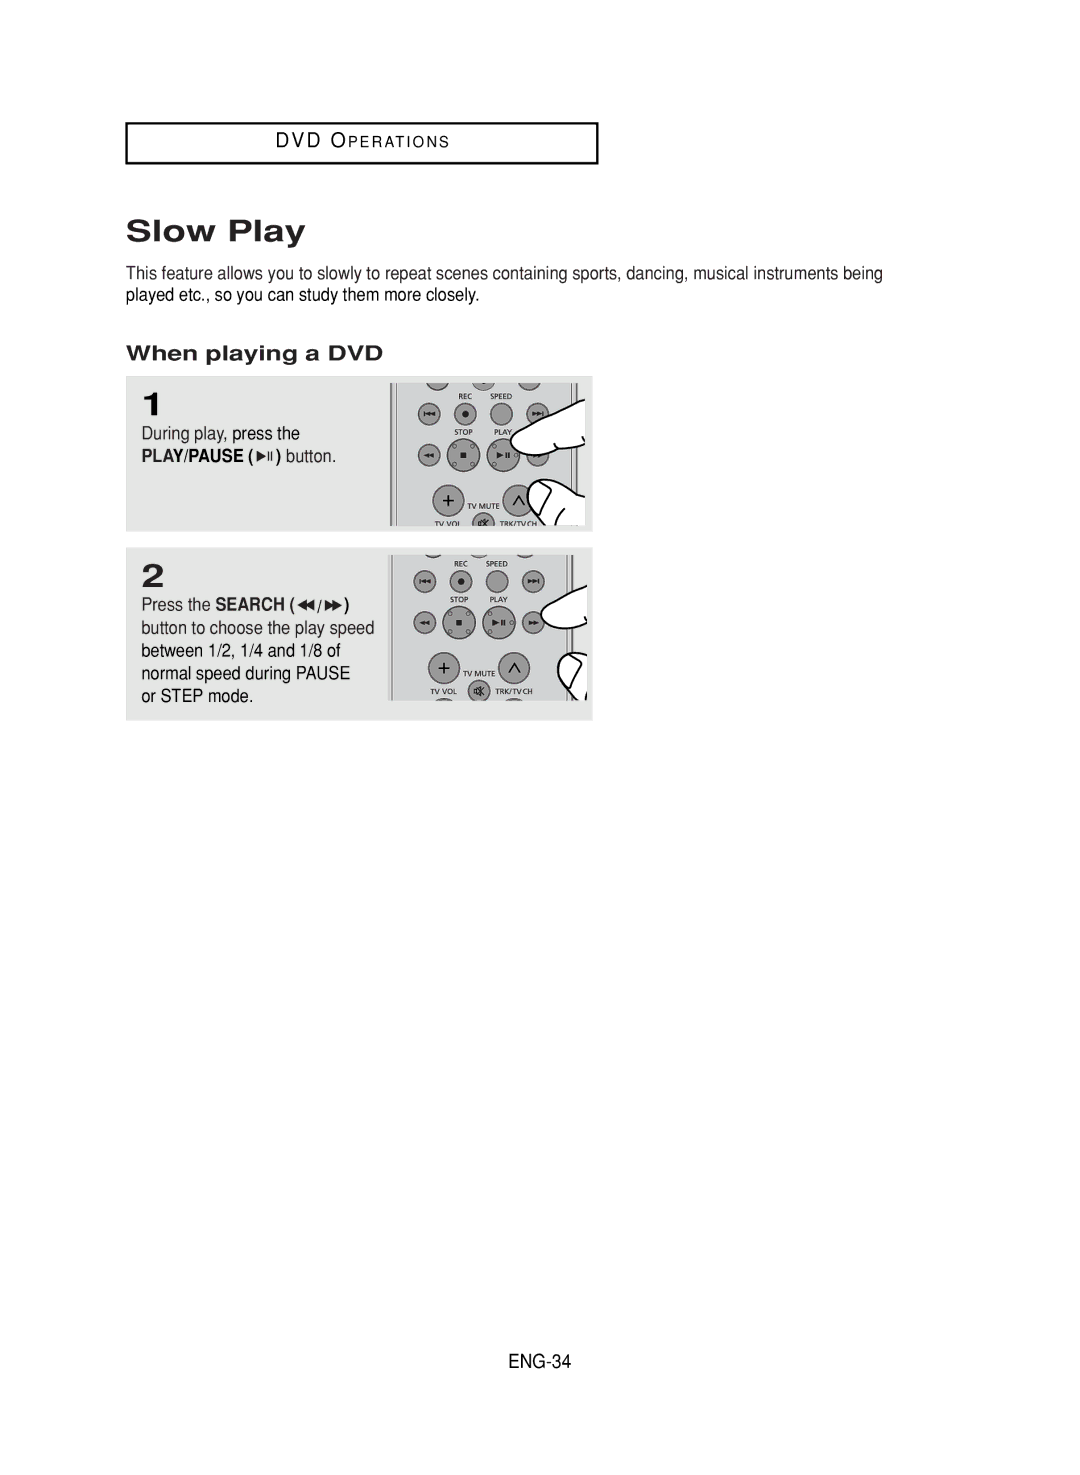 Samsung DVD-V9800 instruction manual Slow Play, ENG-34, During play, press 